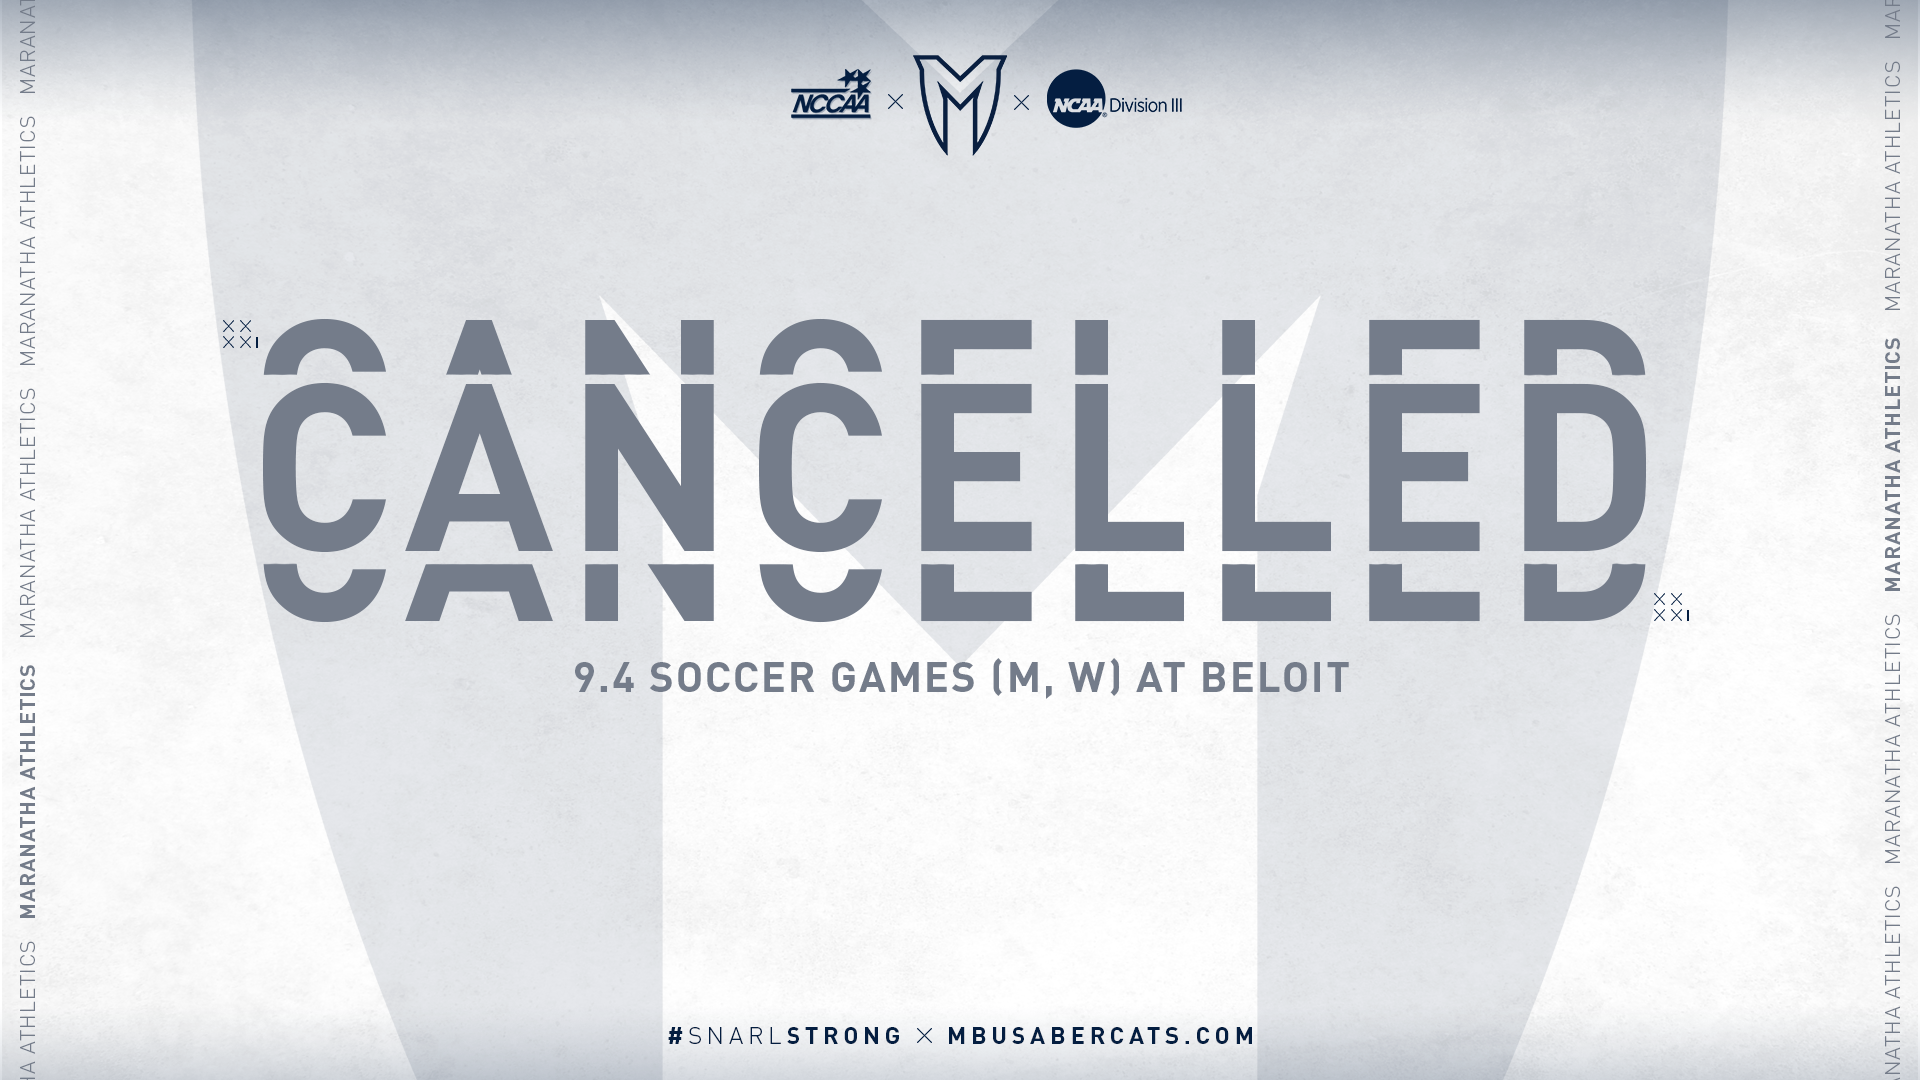 September 4 Soccer Games Cancelled